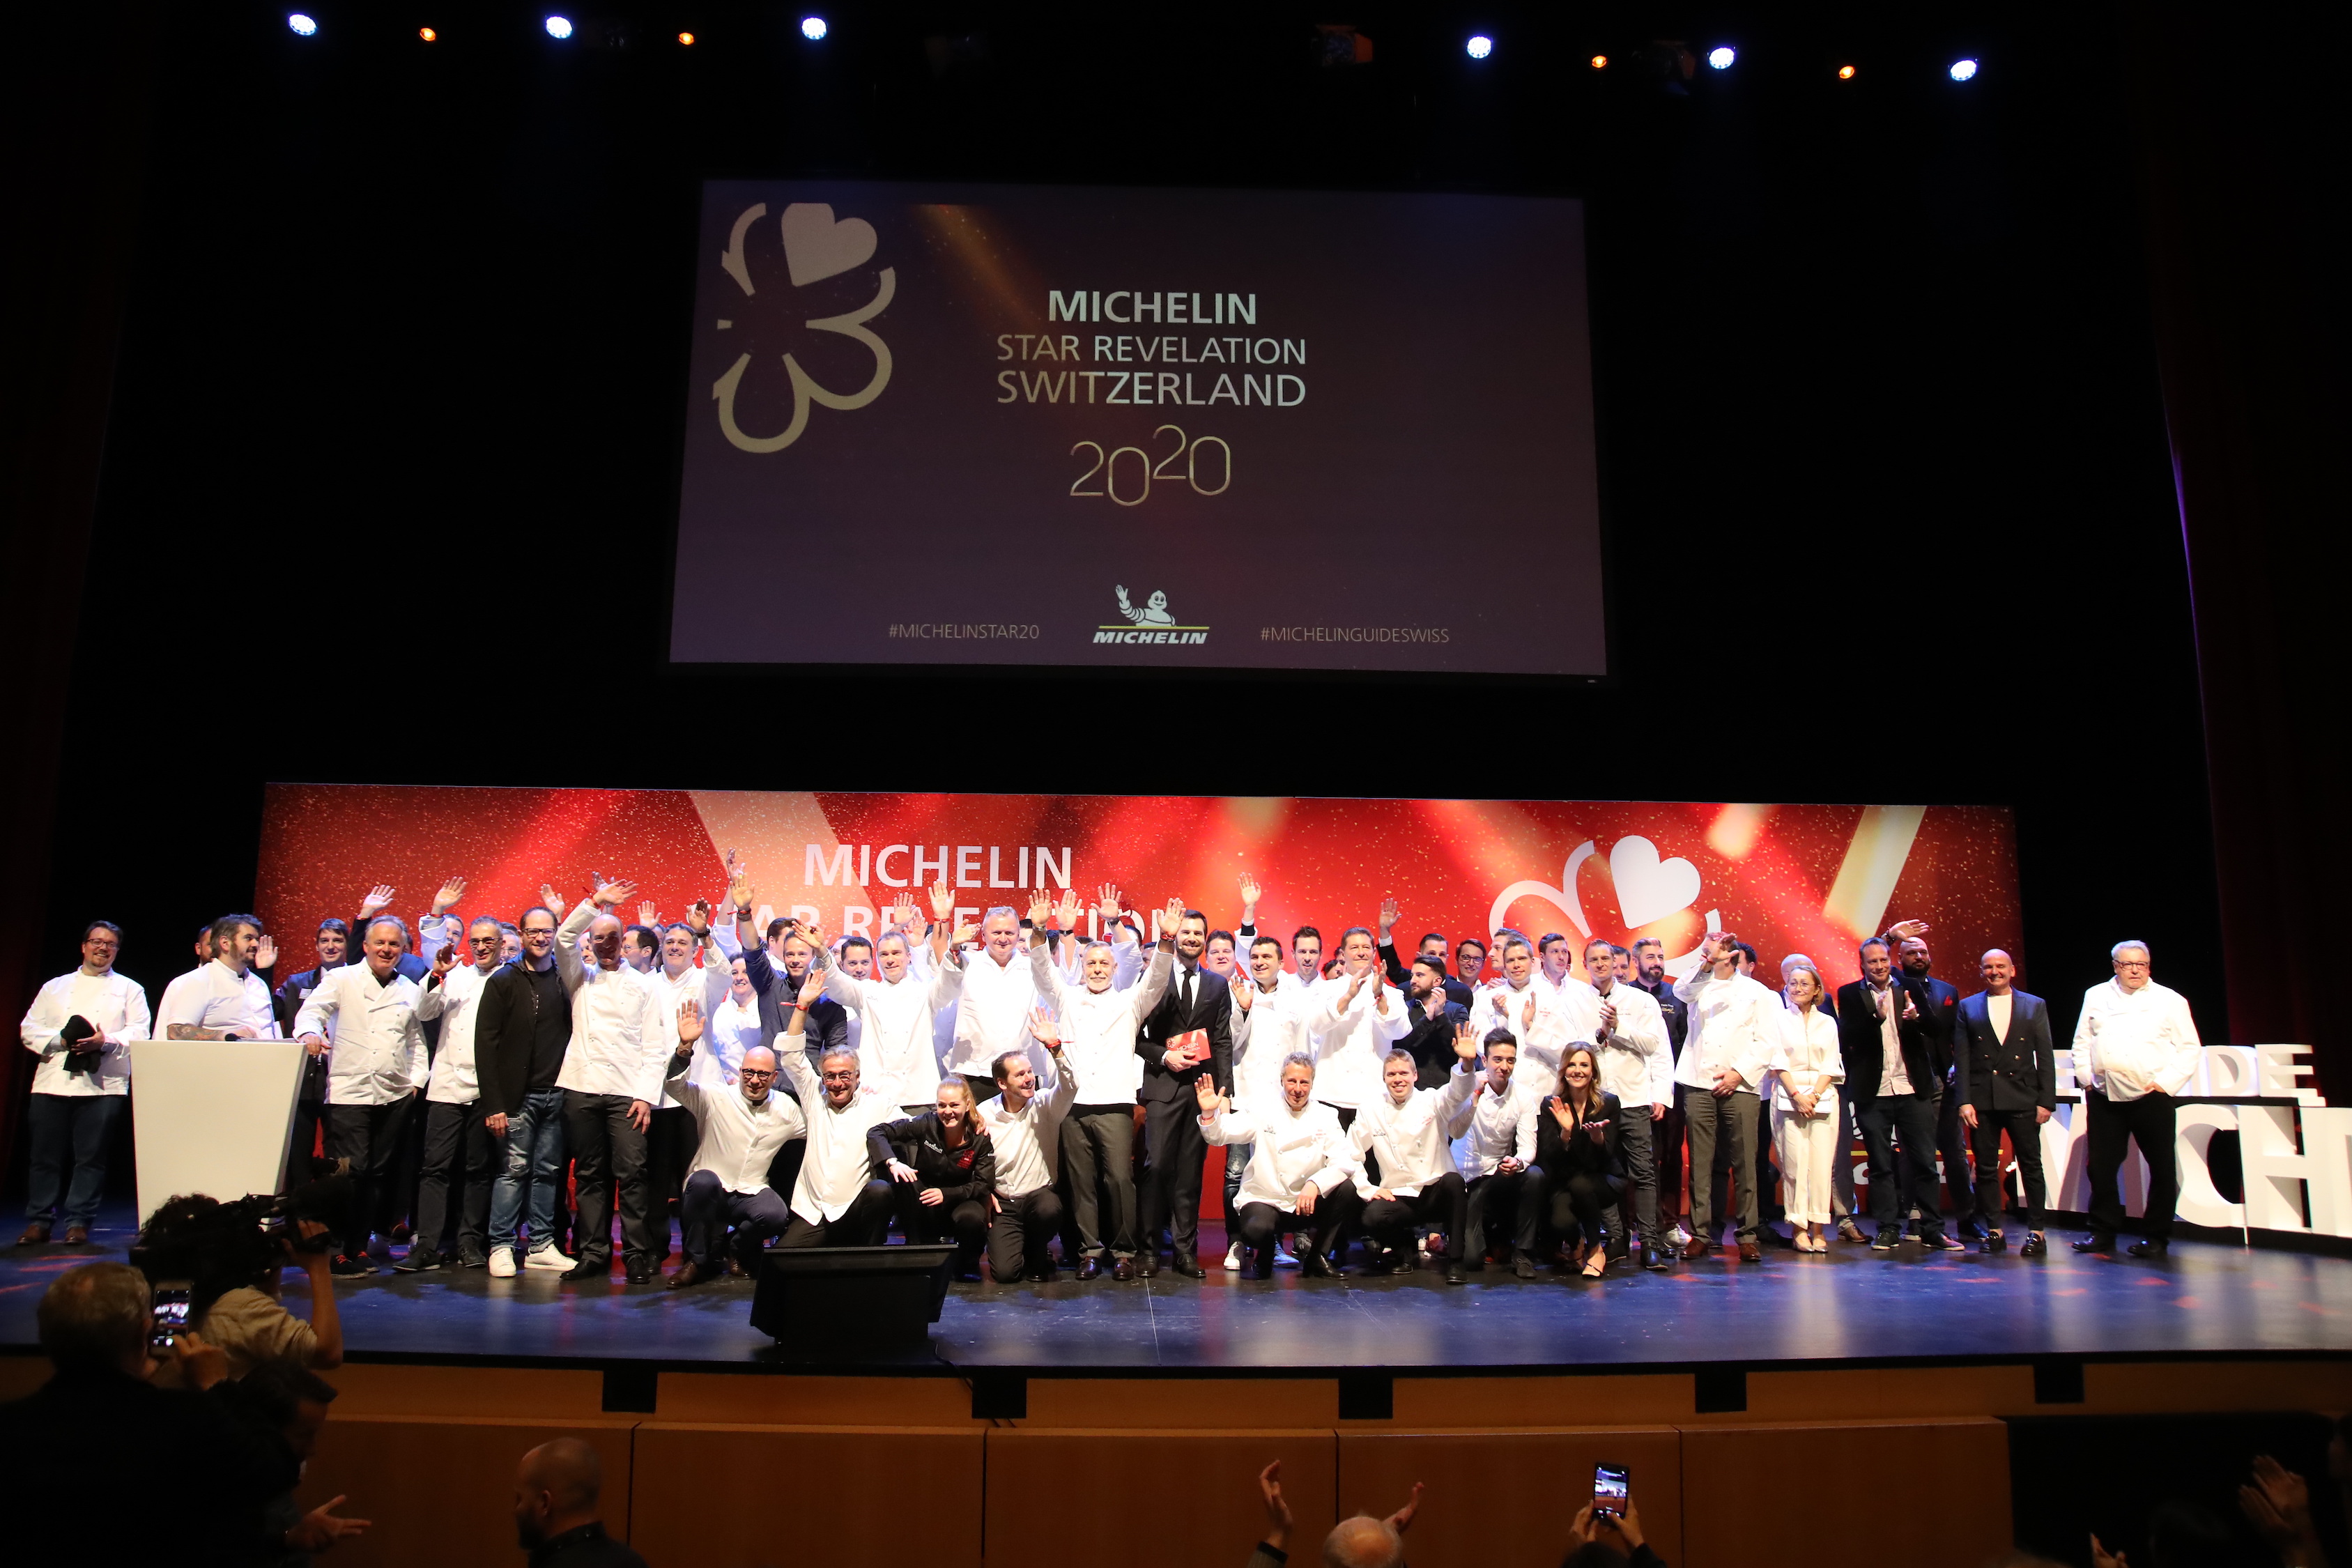 Michelin Star Revelation Event 2020 in Lugano, Switzerland